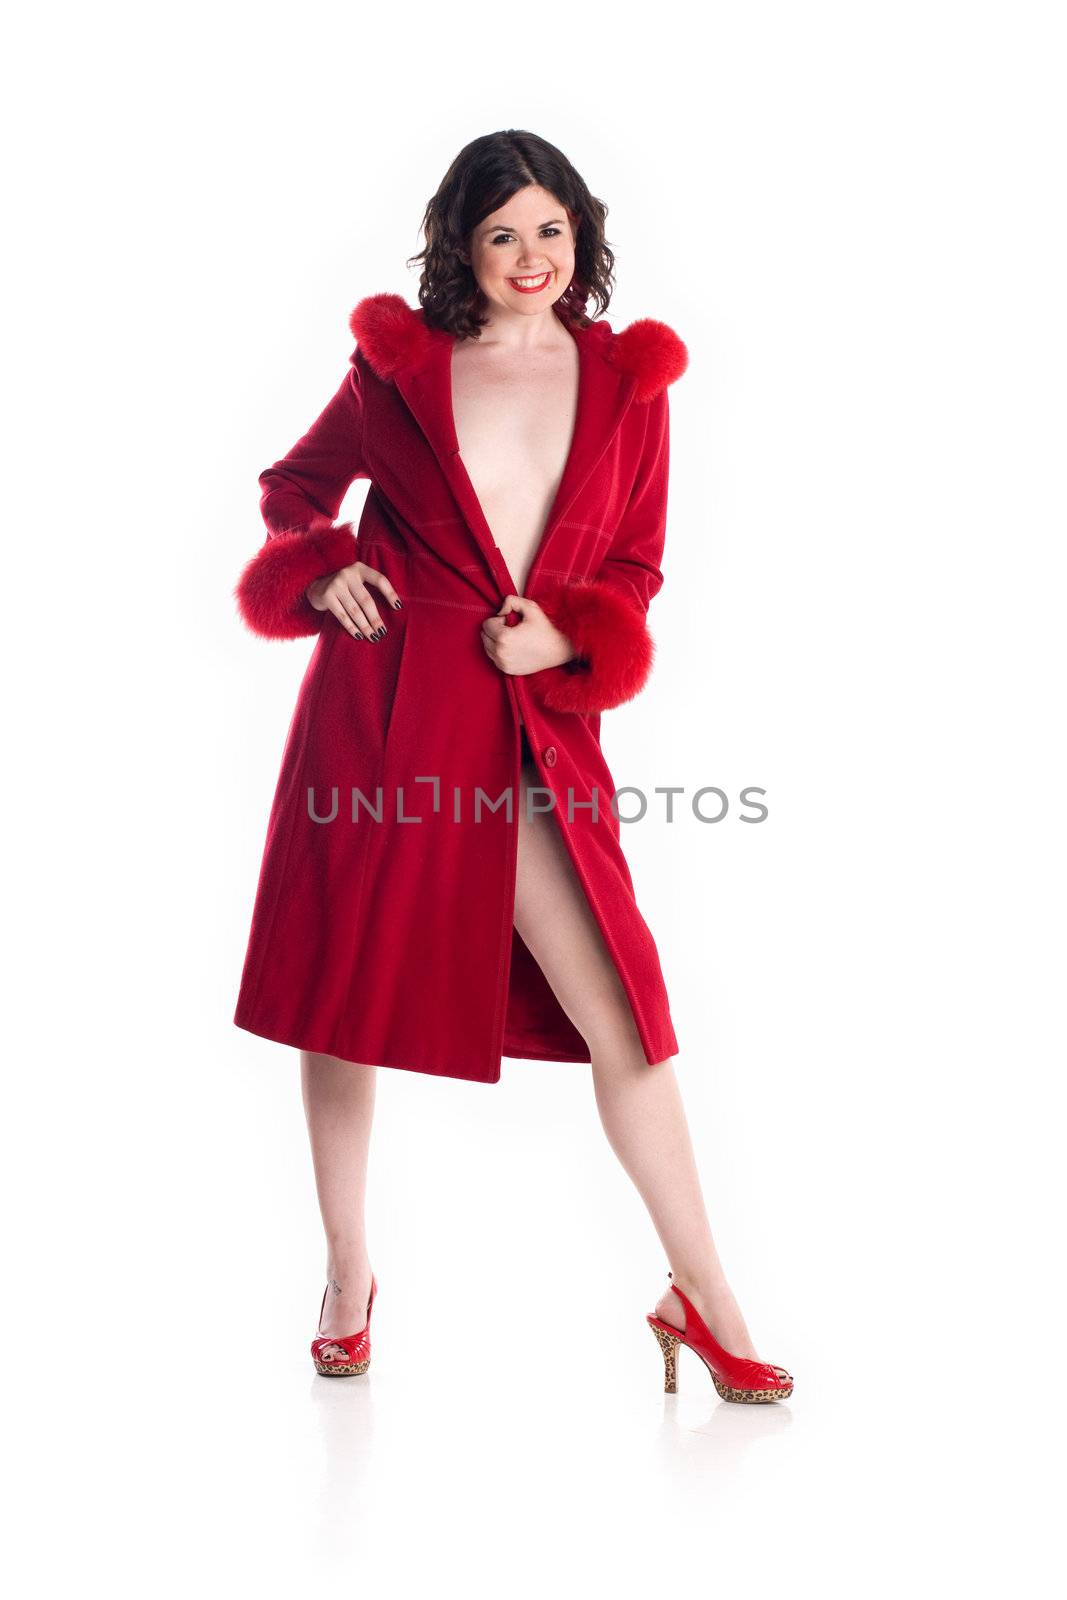 cute girl in pin-up pose in red coat by krazeedrocks